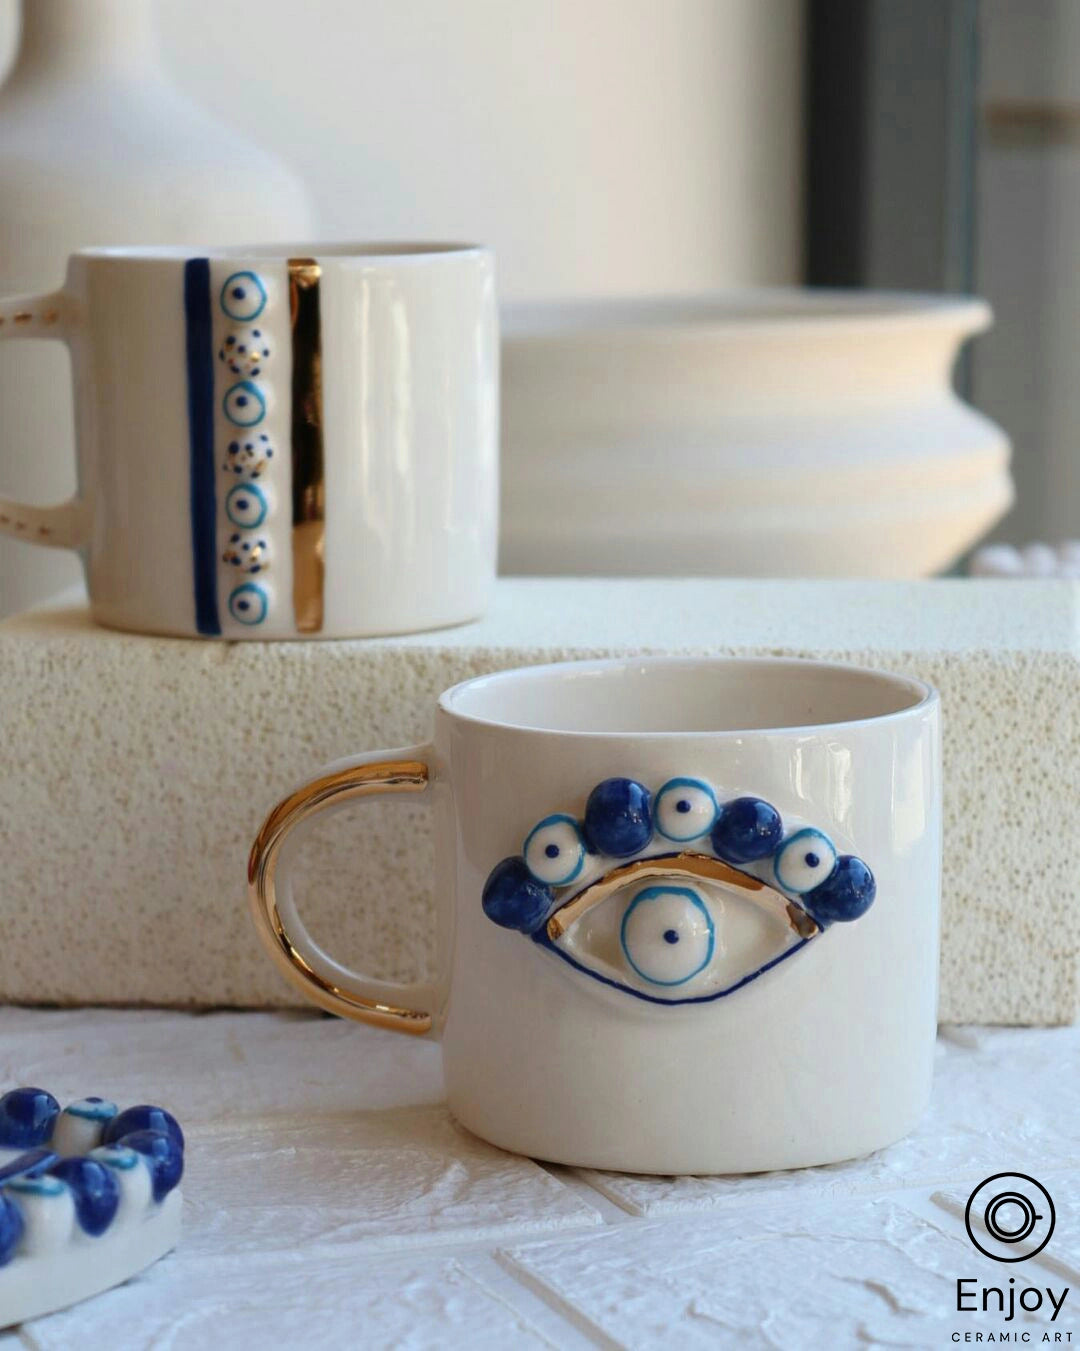 Blue Way Mug: Handmade Ceramic Coffee Mug with Blue Evil Eye Design & Gold Details - Unique Hand Thrown 10 oz Pottery Coffee Cup